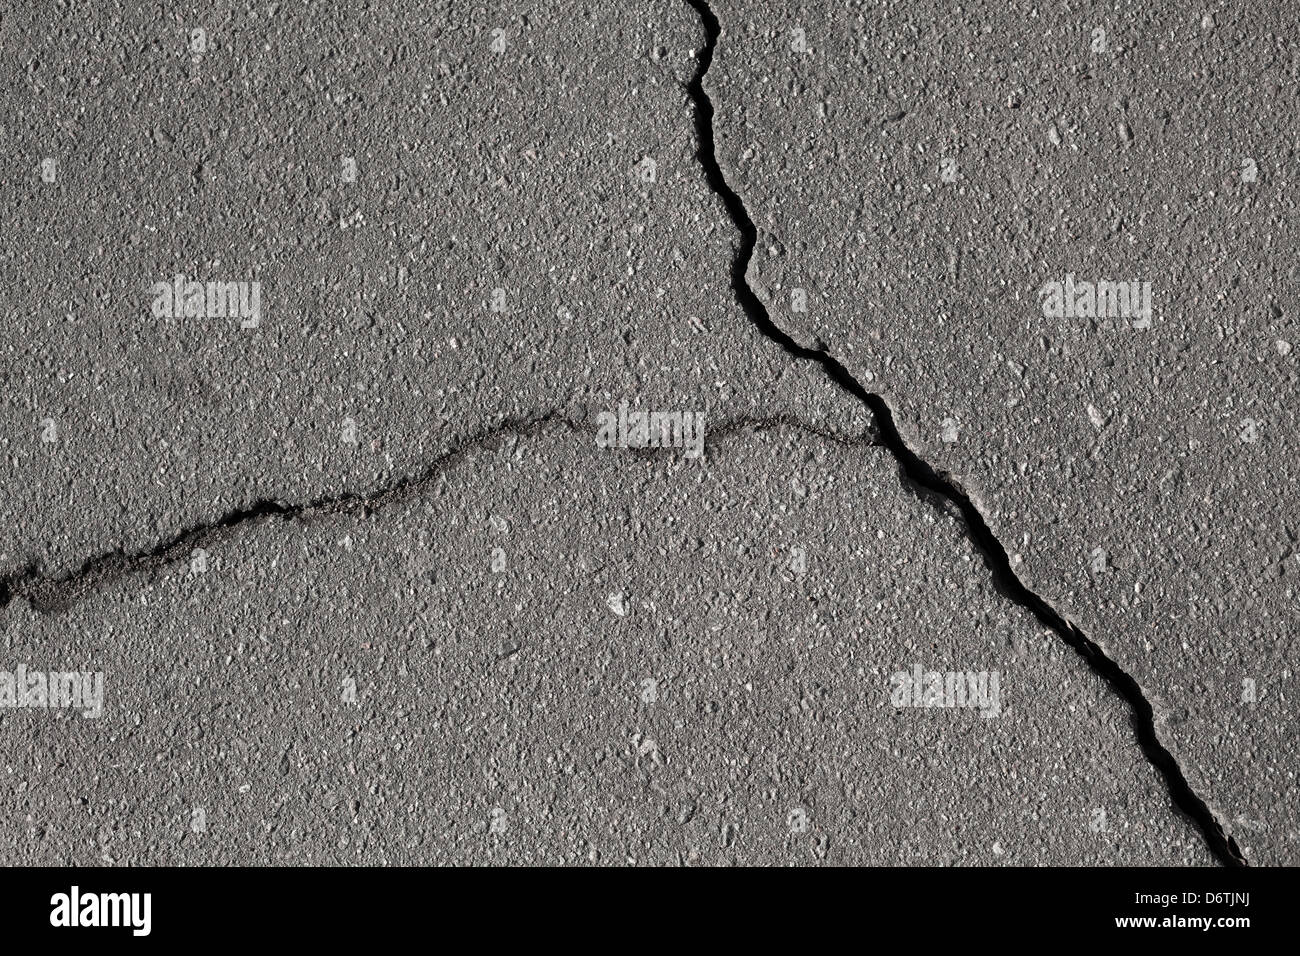 Closeup texture of damaged asphalt road surface with cracks Stock Photo